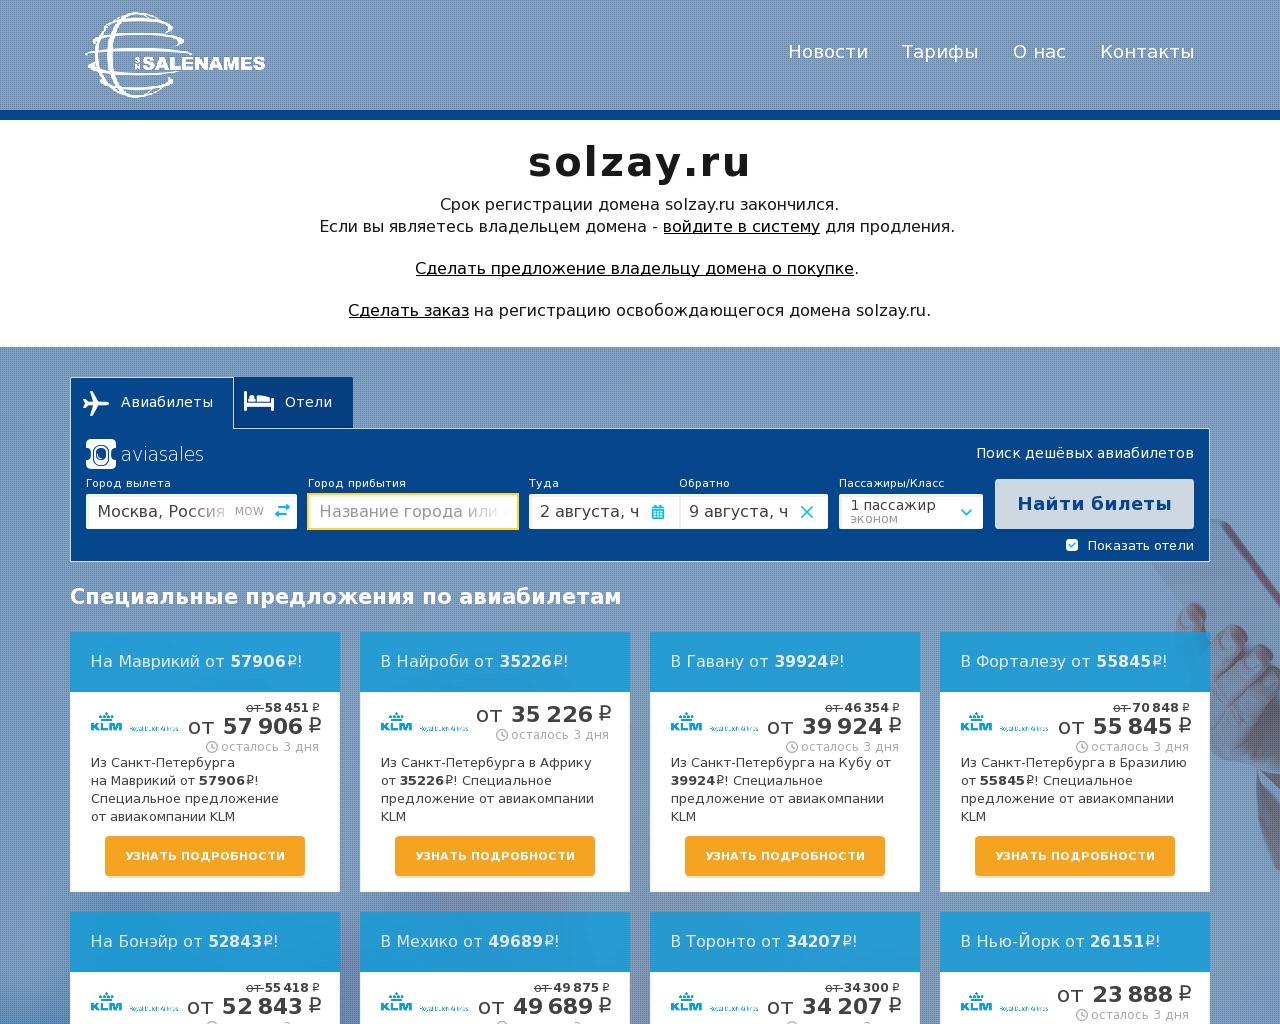 Изображение сайта solzay.ru в разрешении 1280x1024